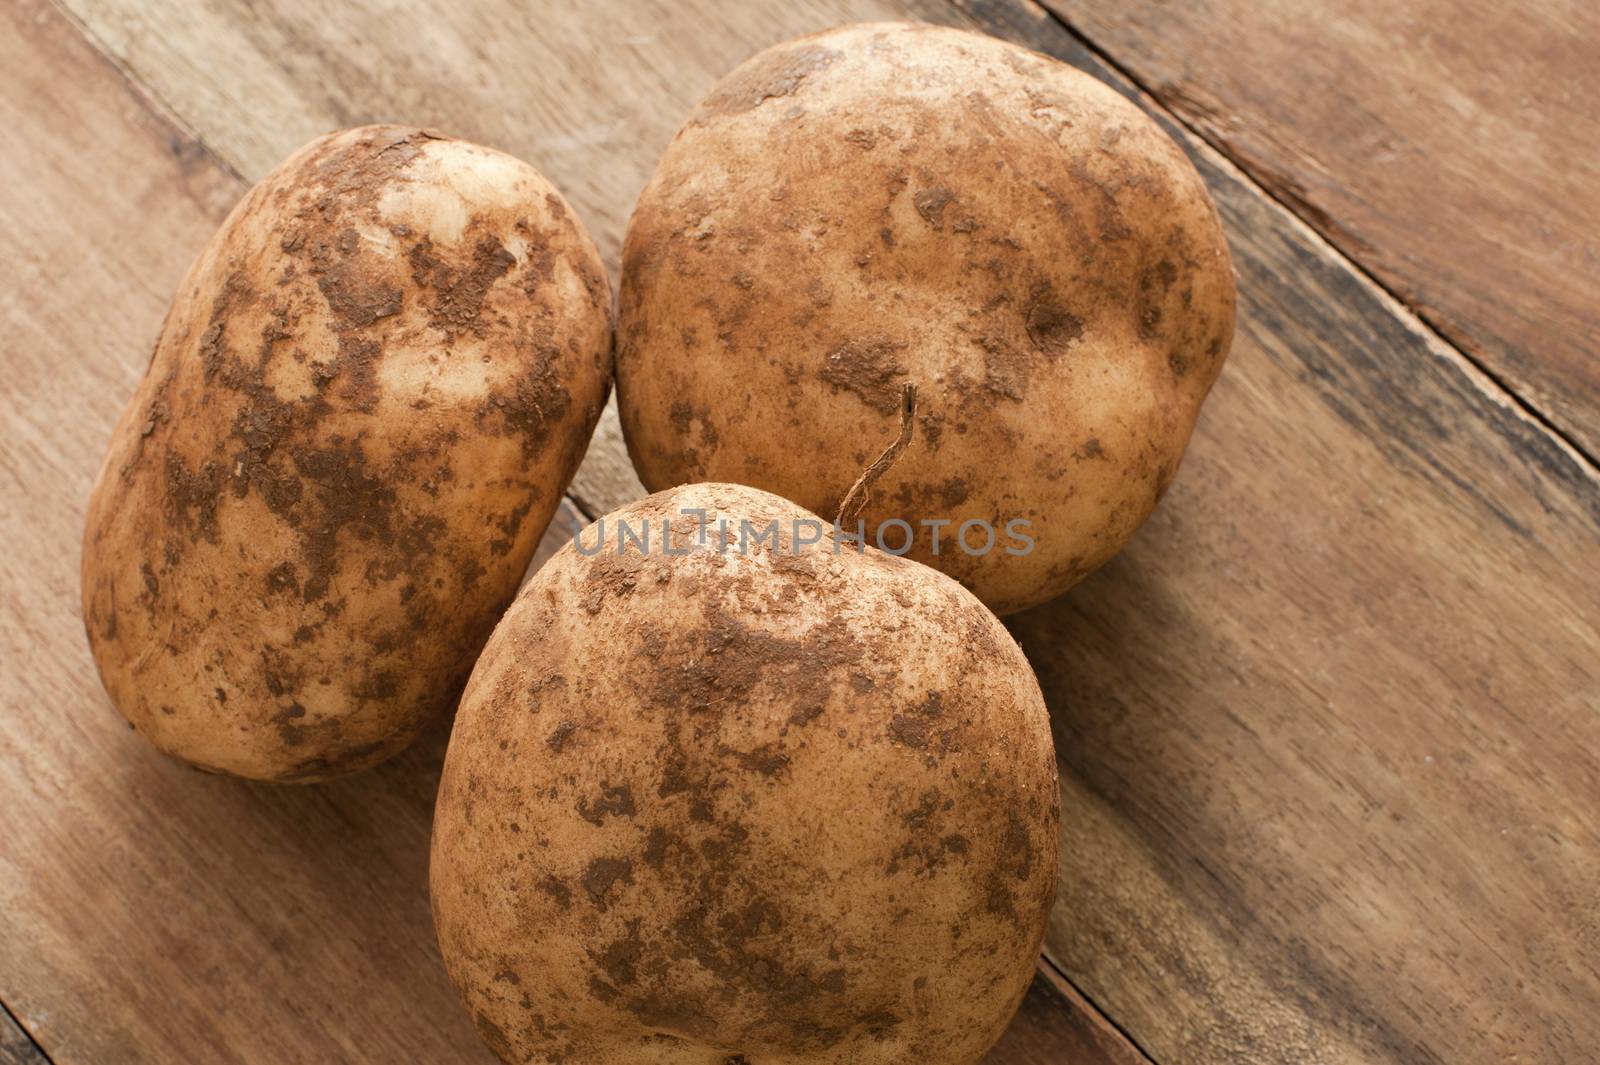 Unwashed fresh farm potatoes by stockarch